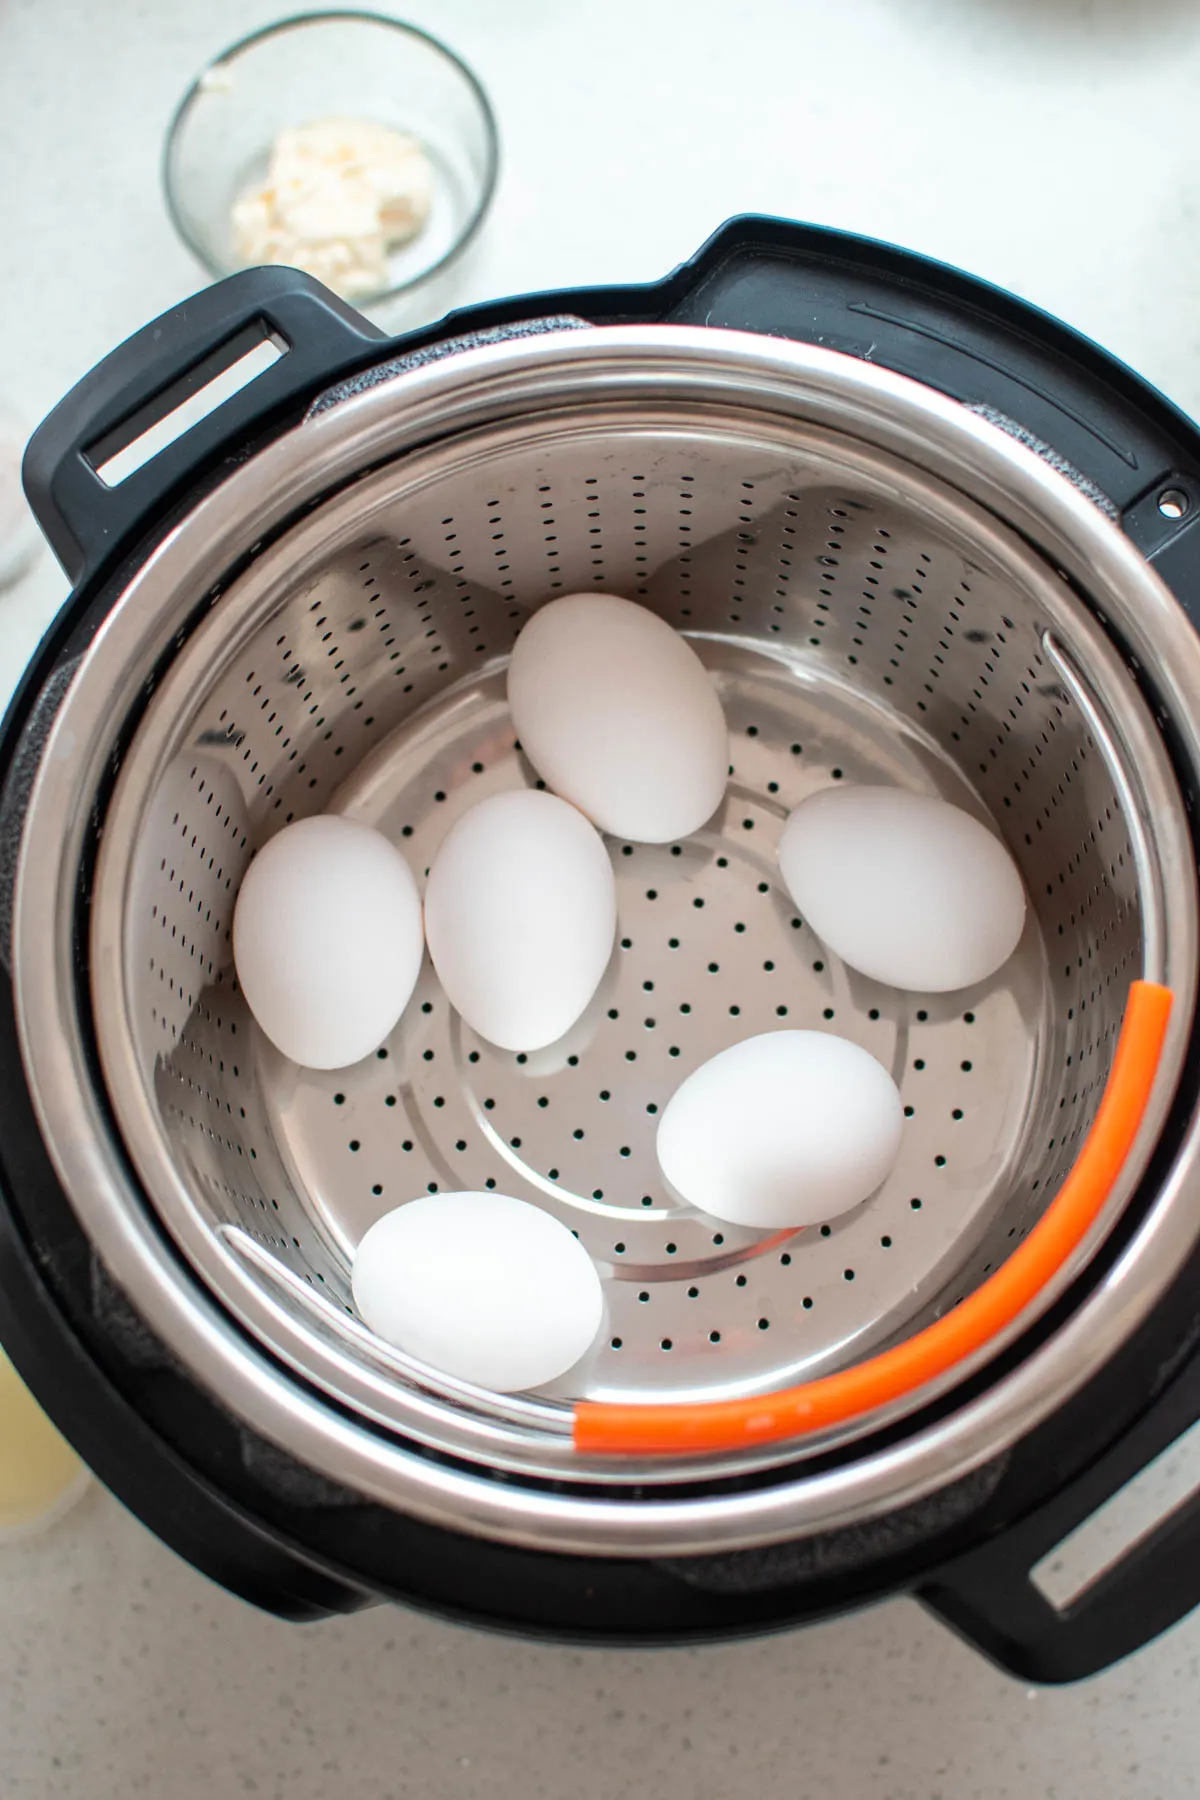 Six eggs on trivet in Instant Pot insert all on quartz countertop.